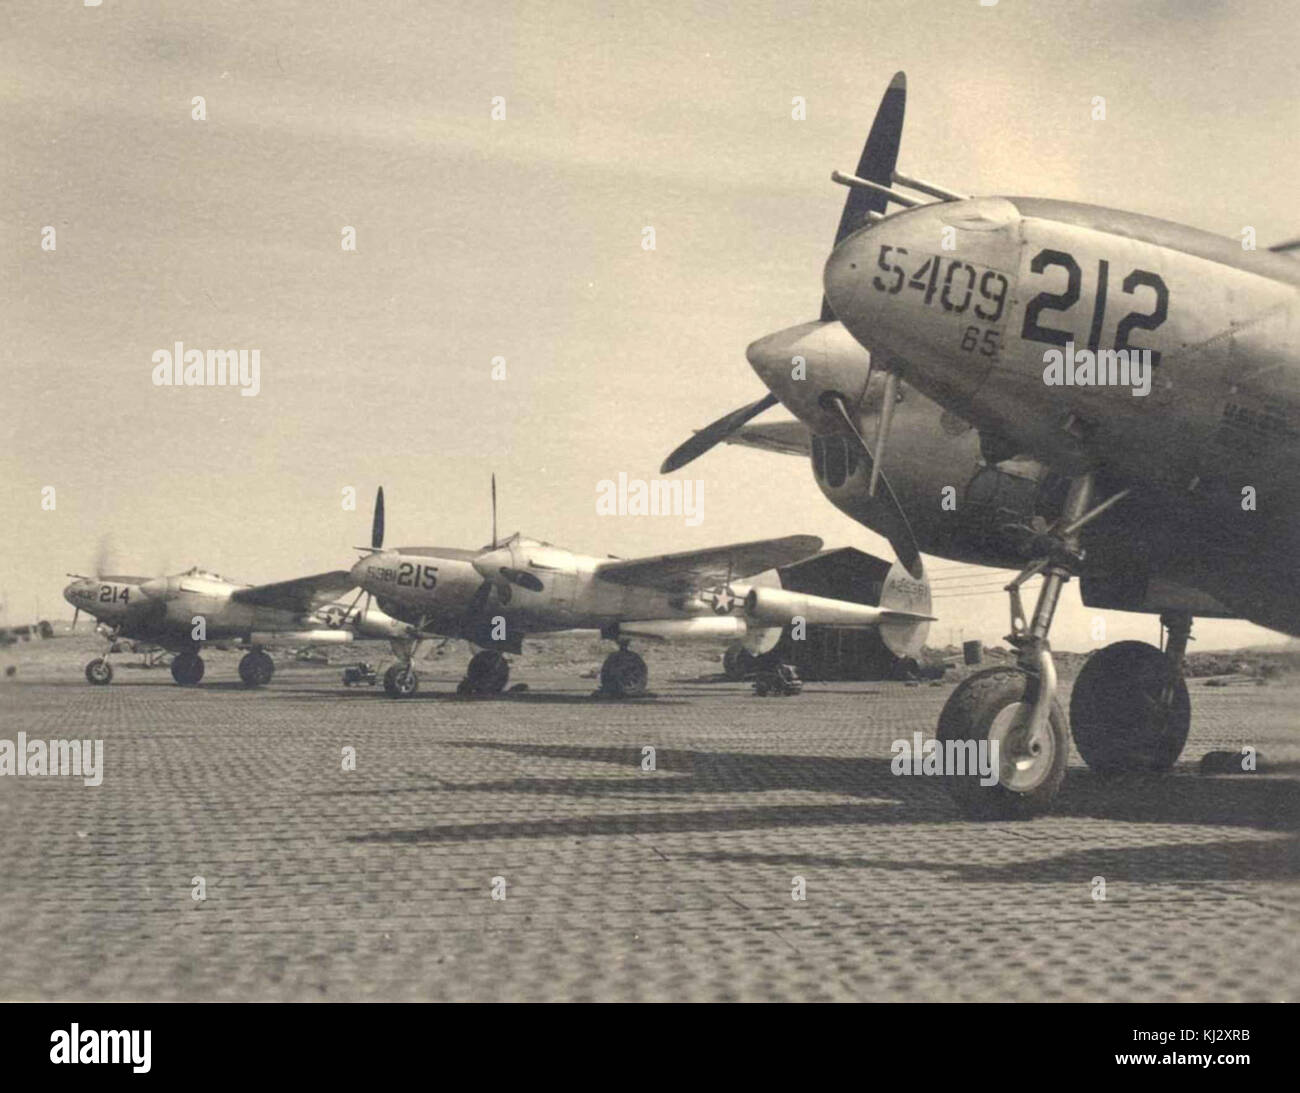 Several Lockheed P-38 Lightning aircraft from world war 2 on runway Stock Photo